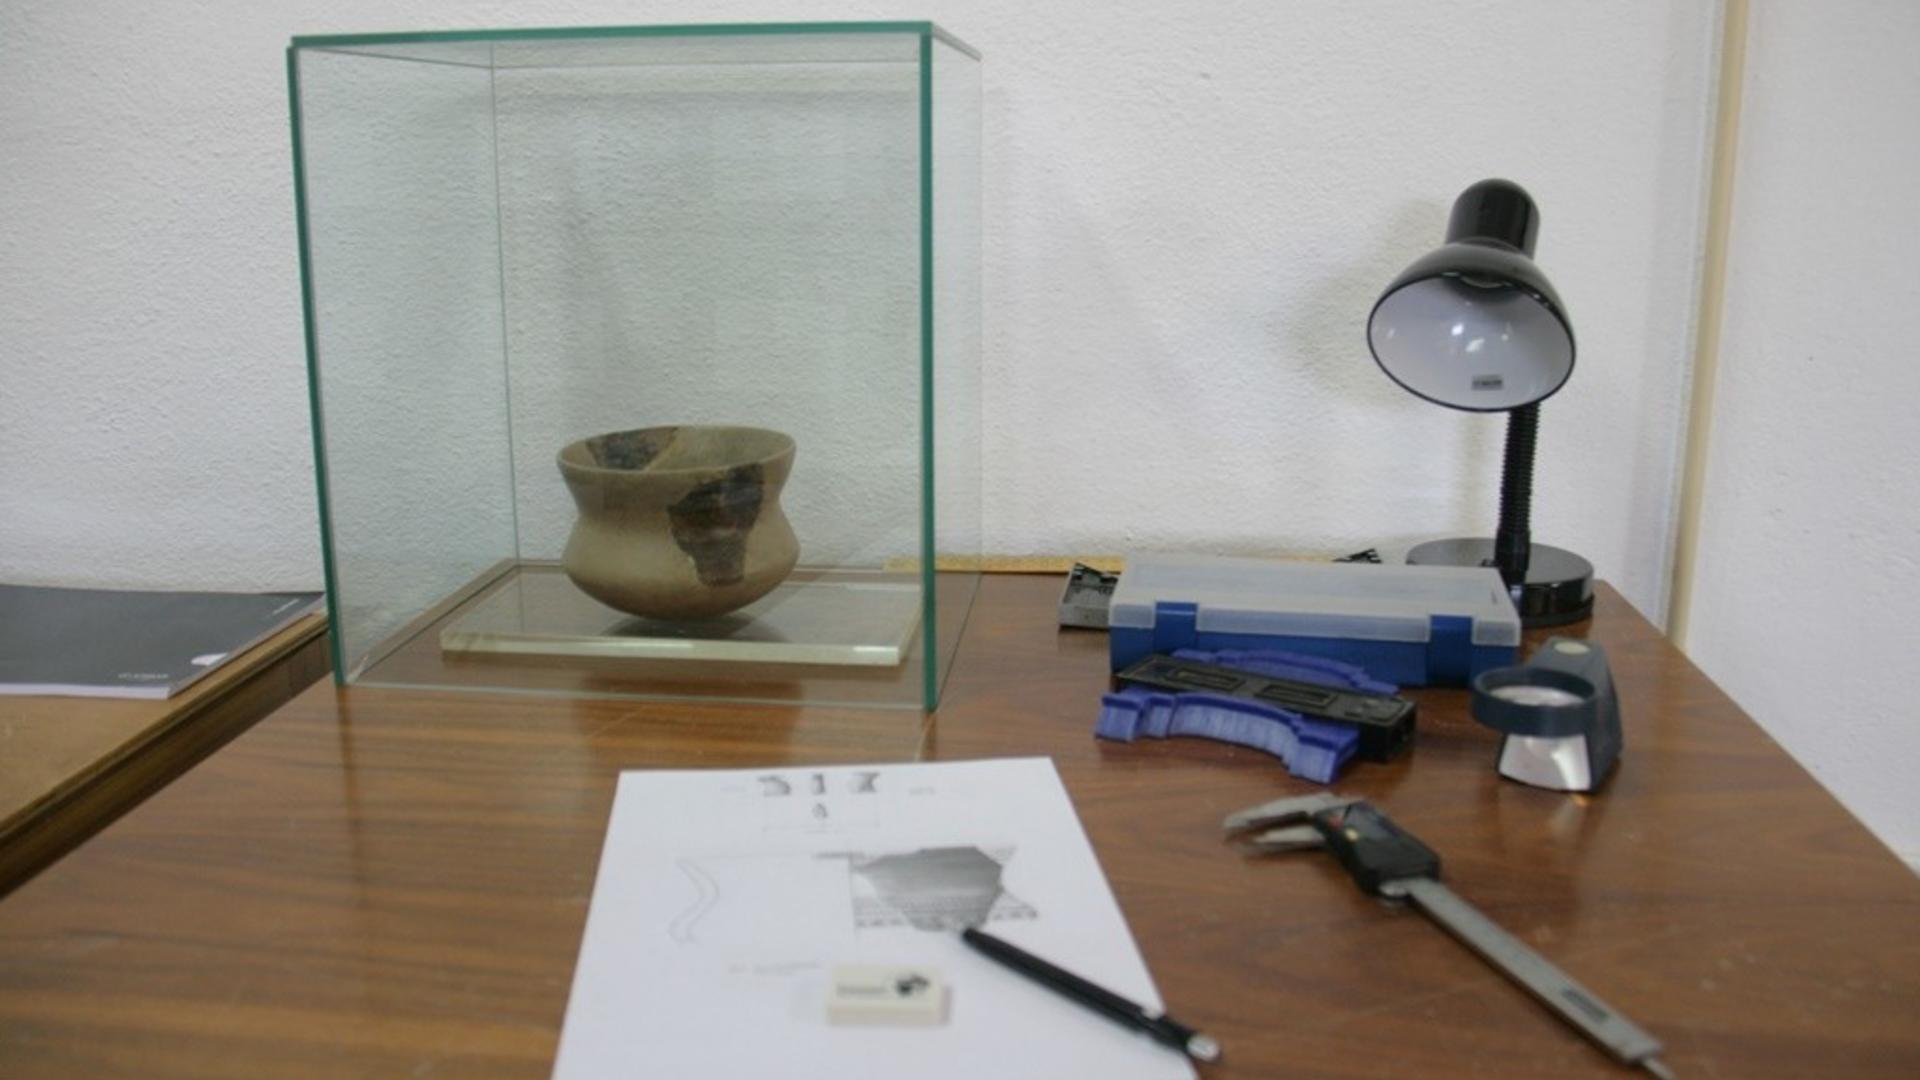 Centro de Estudos Arqueológicos de VFX – CEAX